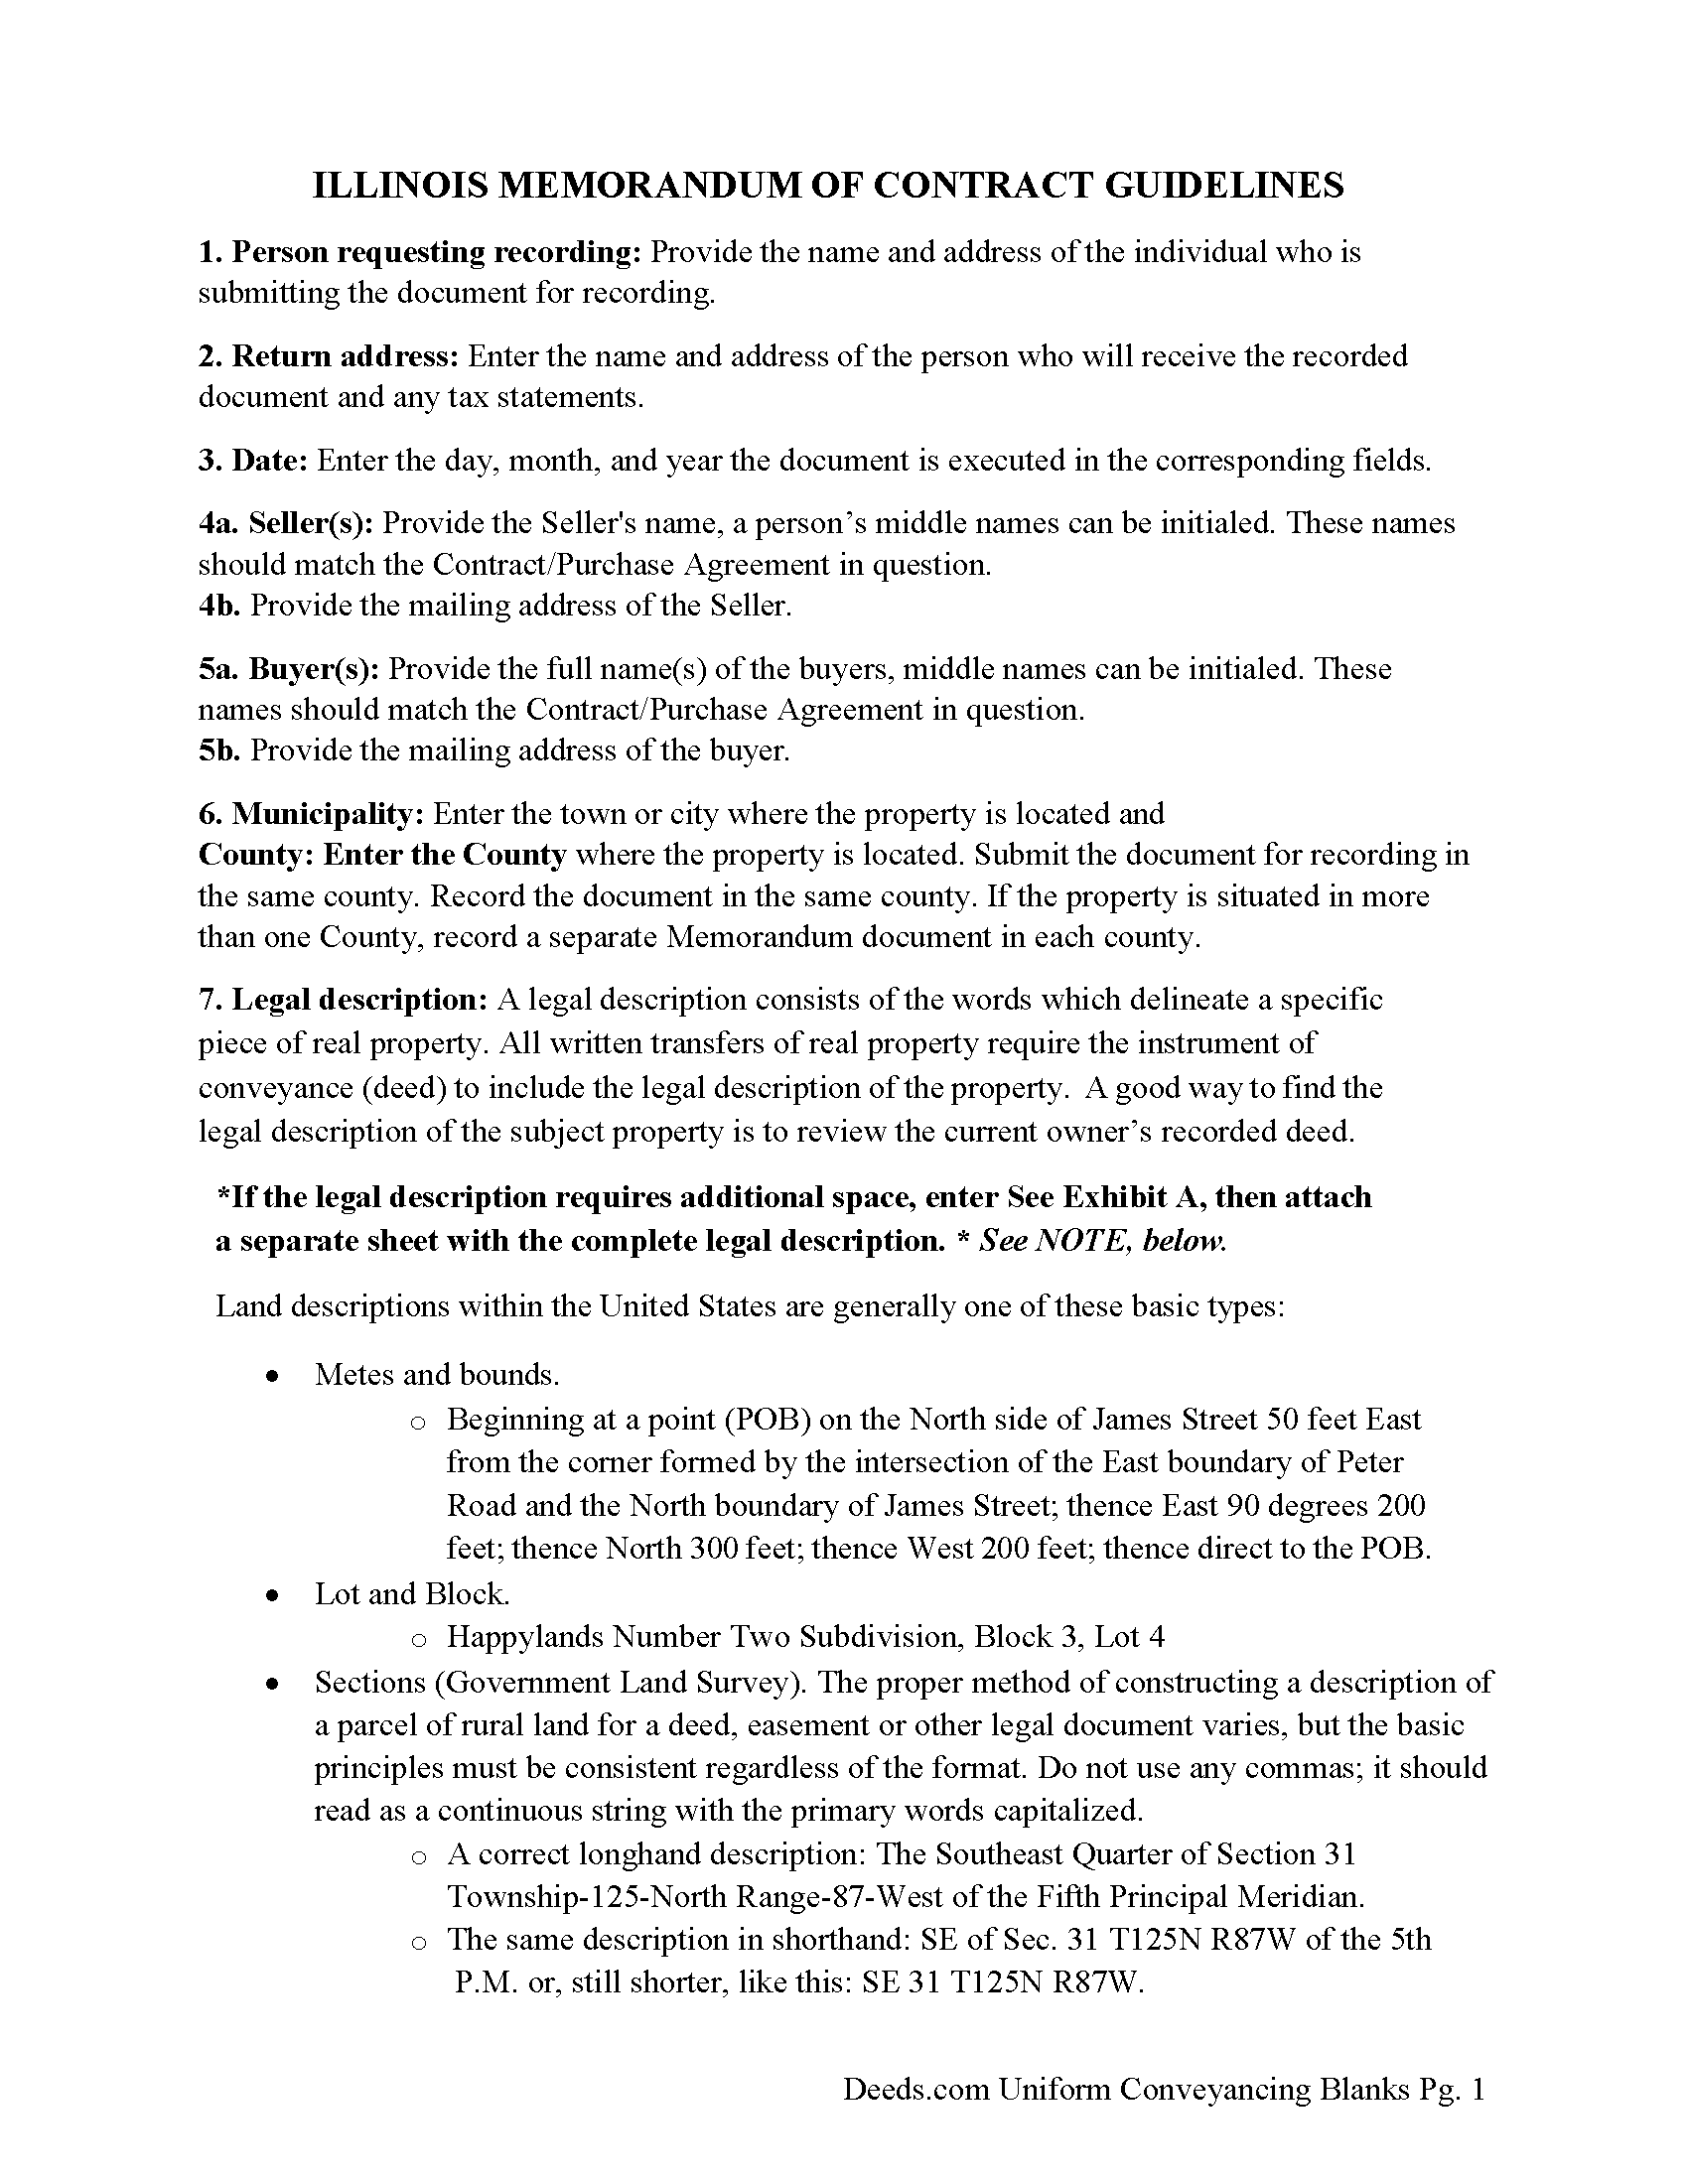 Fulton County Memorandum of an Installment Sales Contract Guide